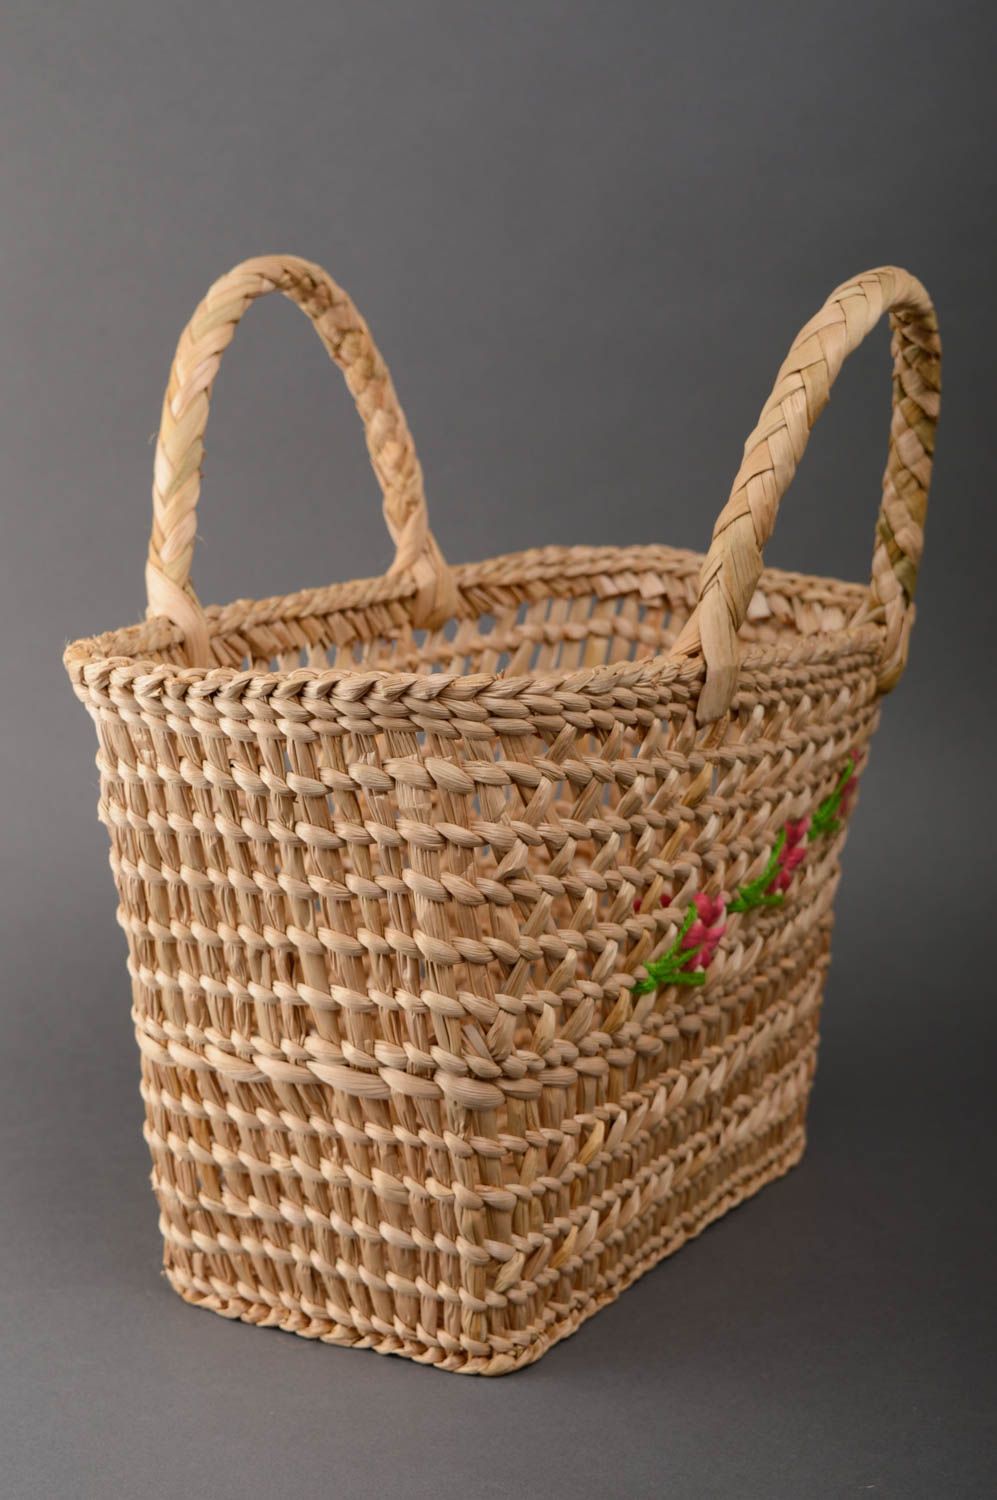 Reedmace basket purse with thread flowers photo 3